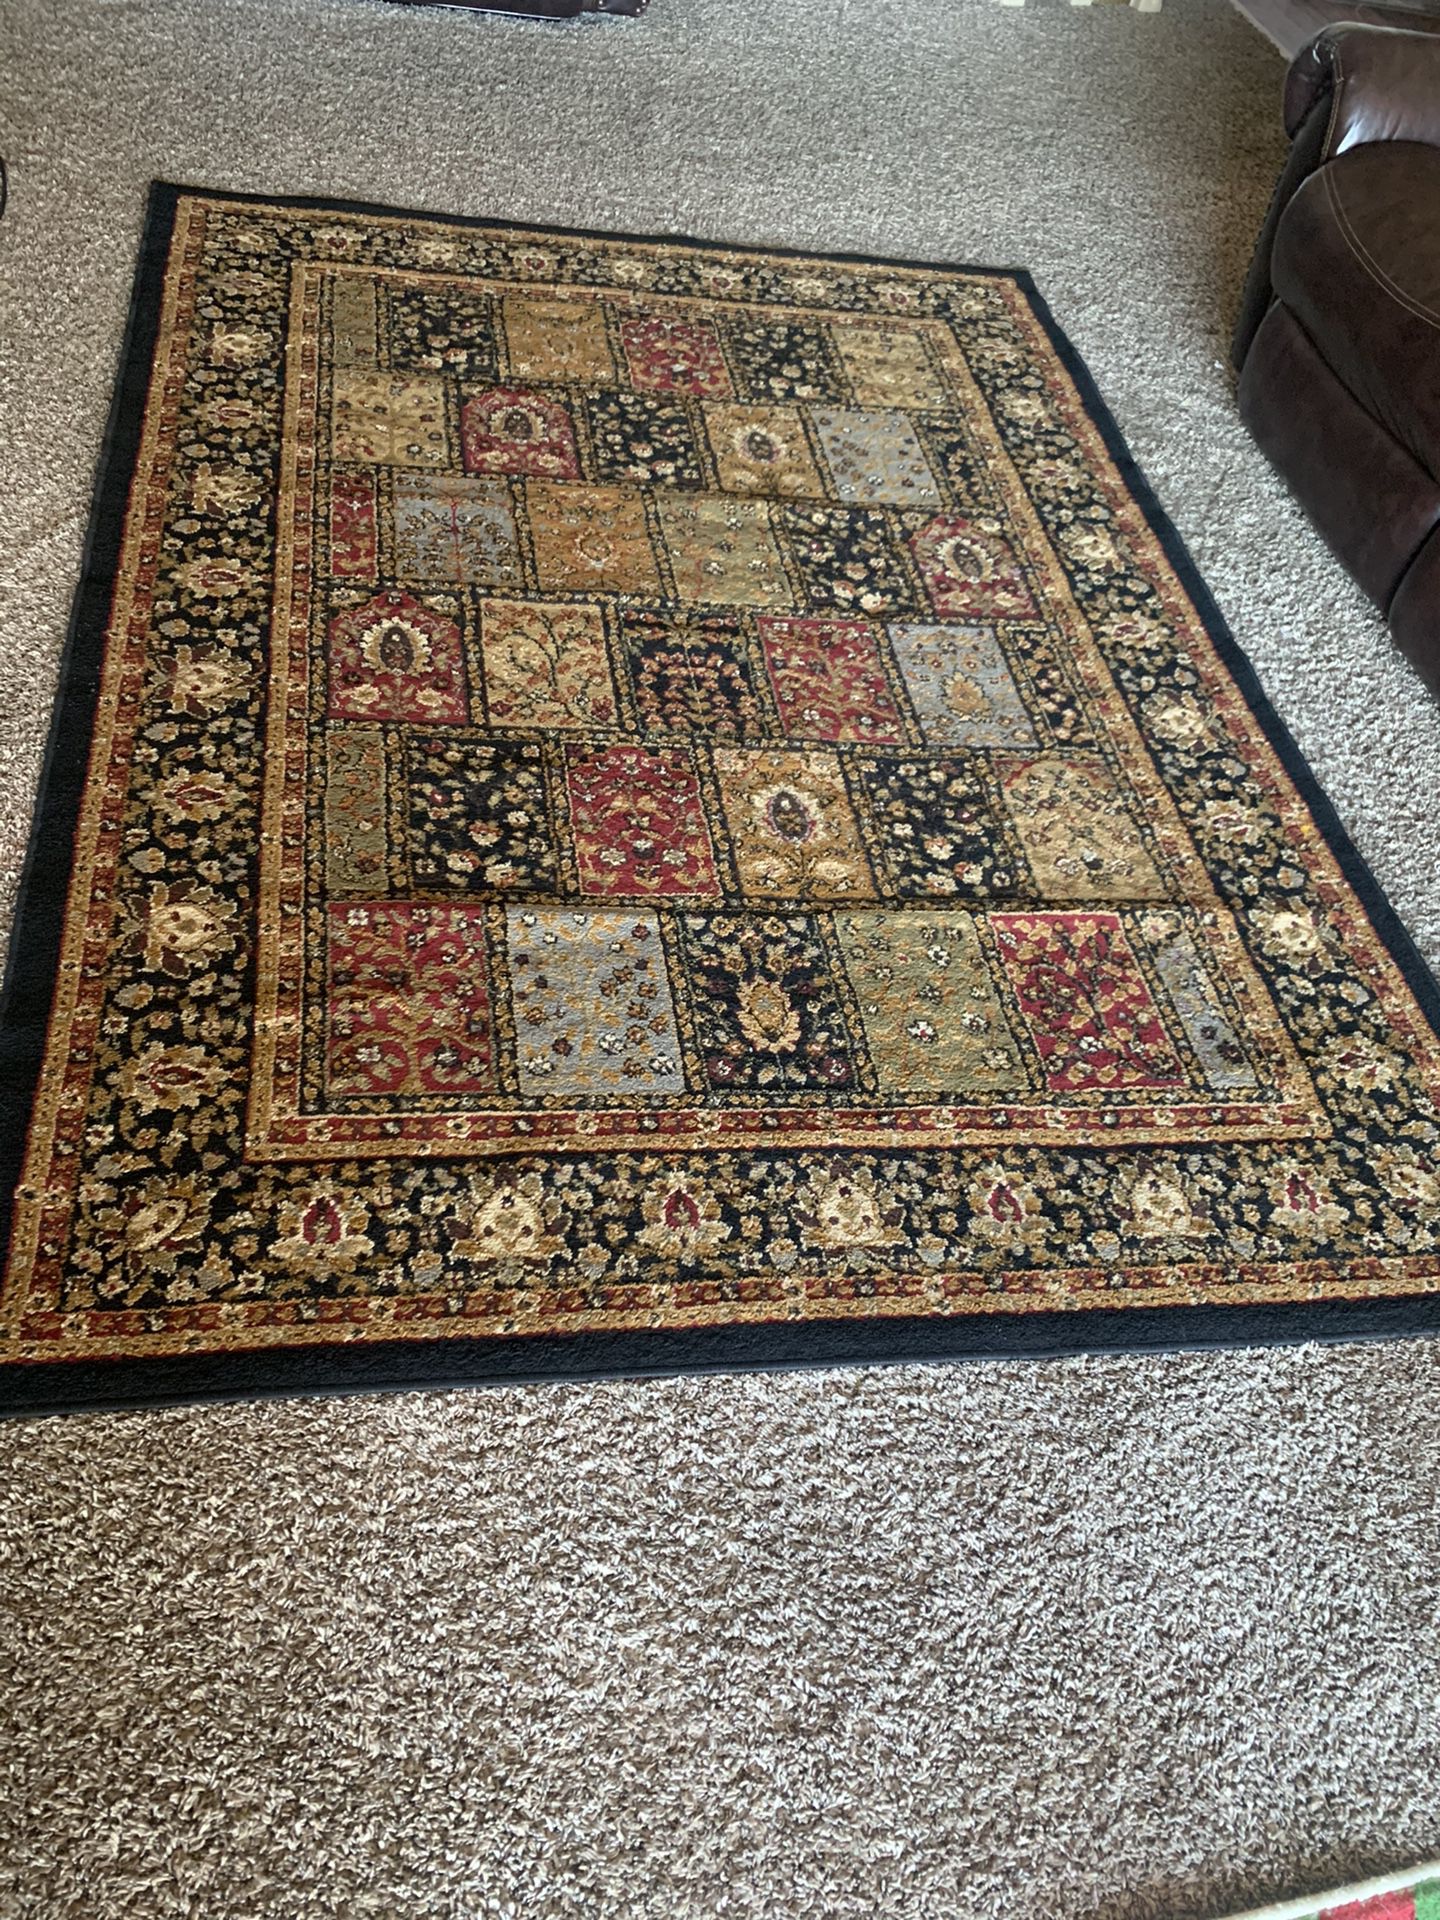 Area rug 5 by 7 feet